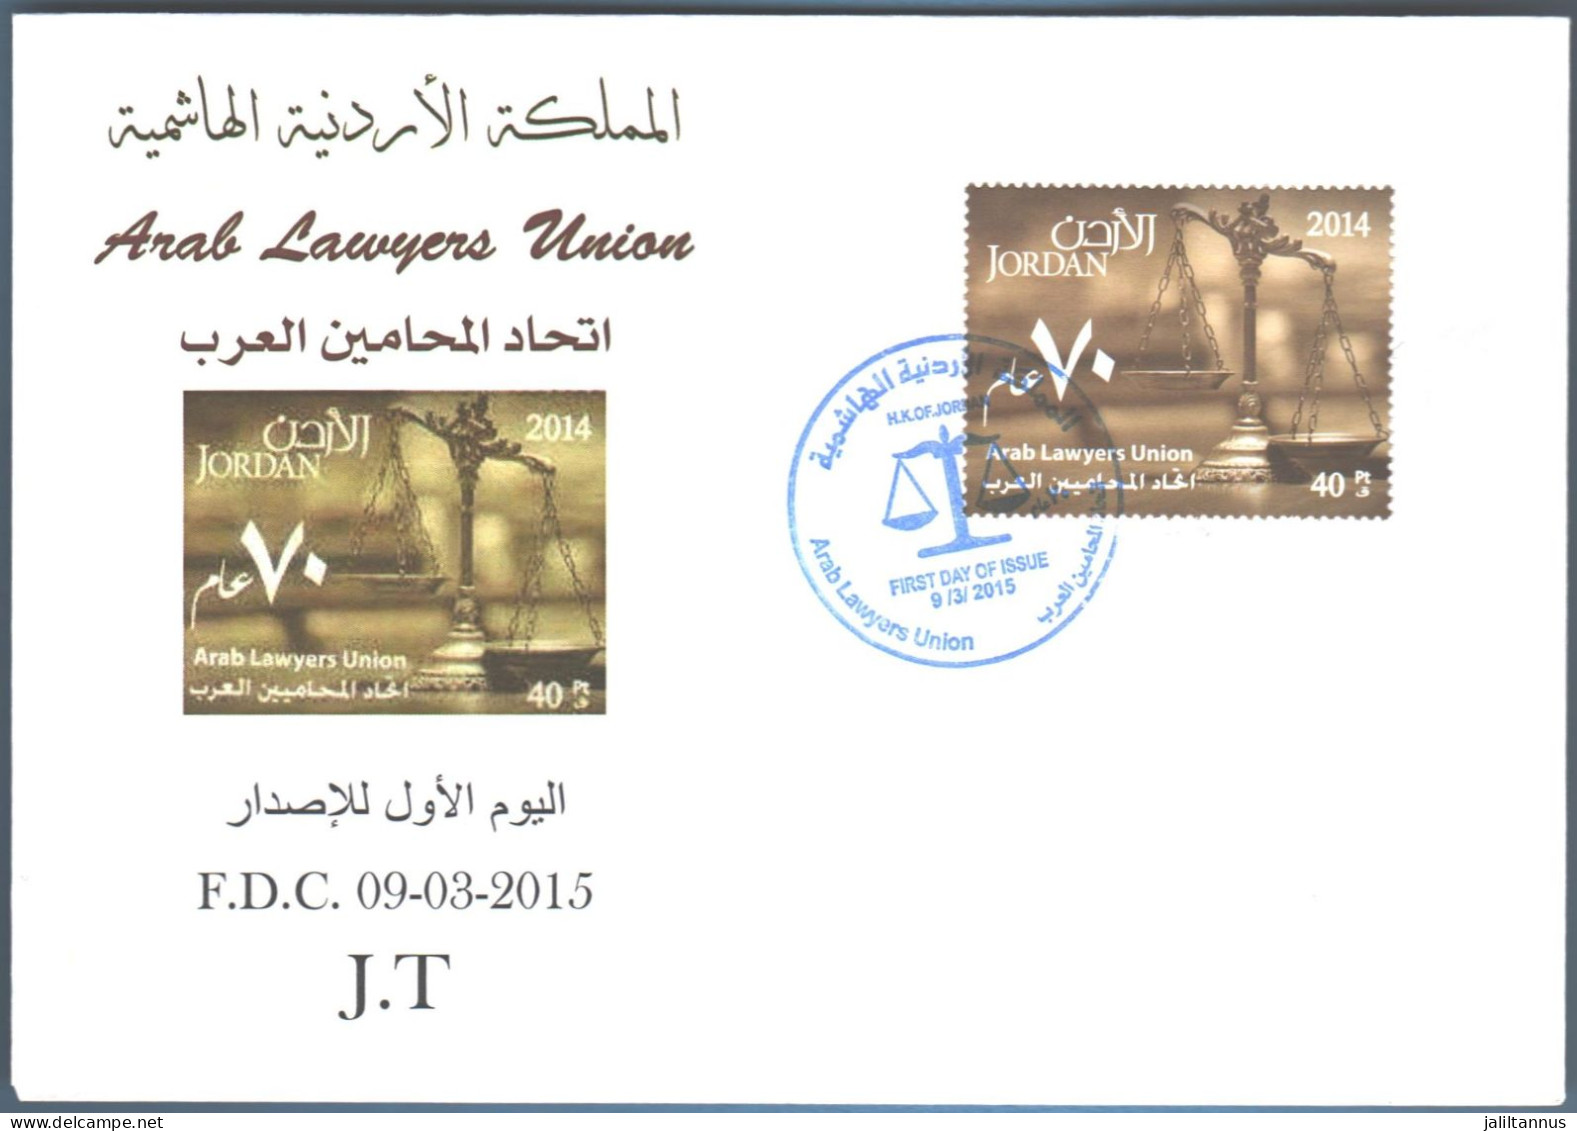 FDC Envelope ARAB LAWYERS UNION 2015 - Giordania